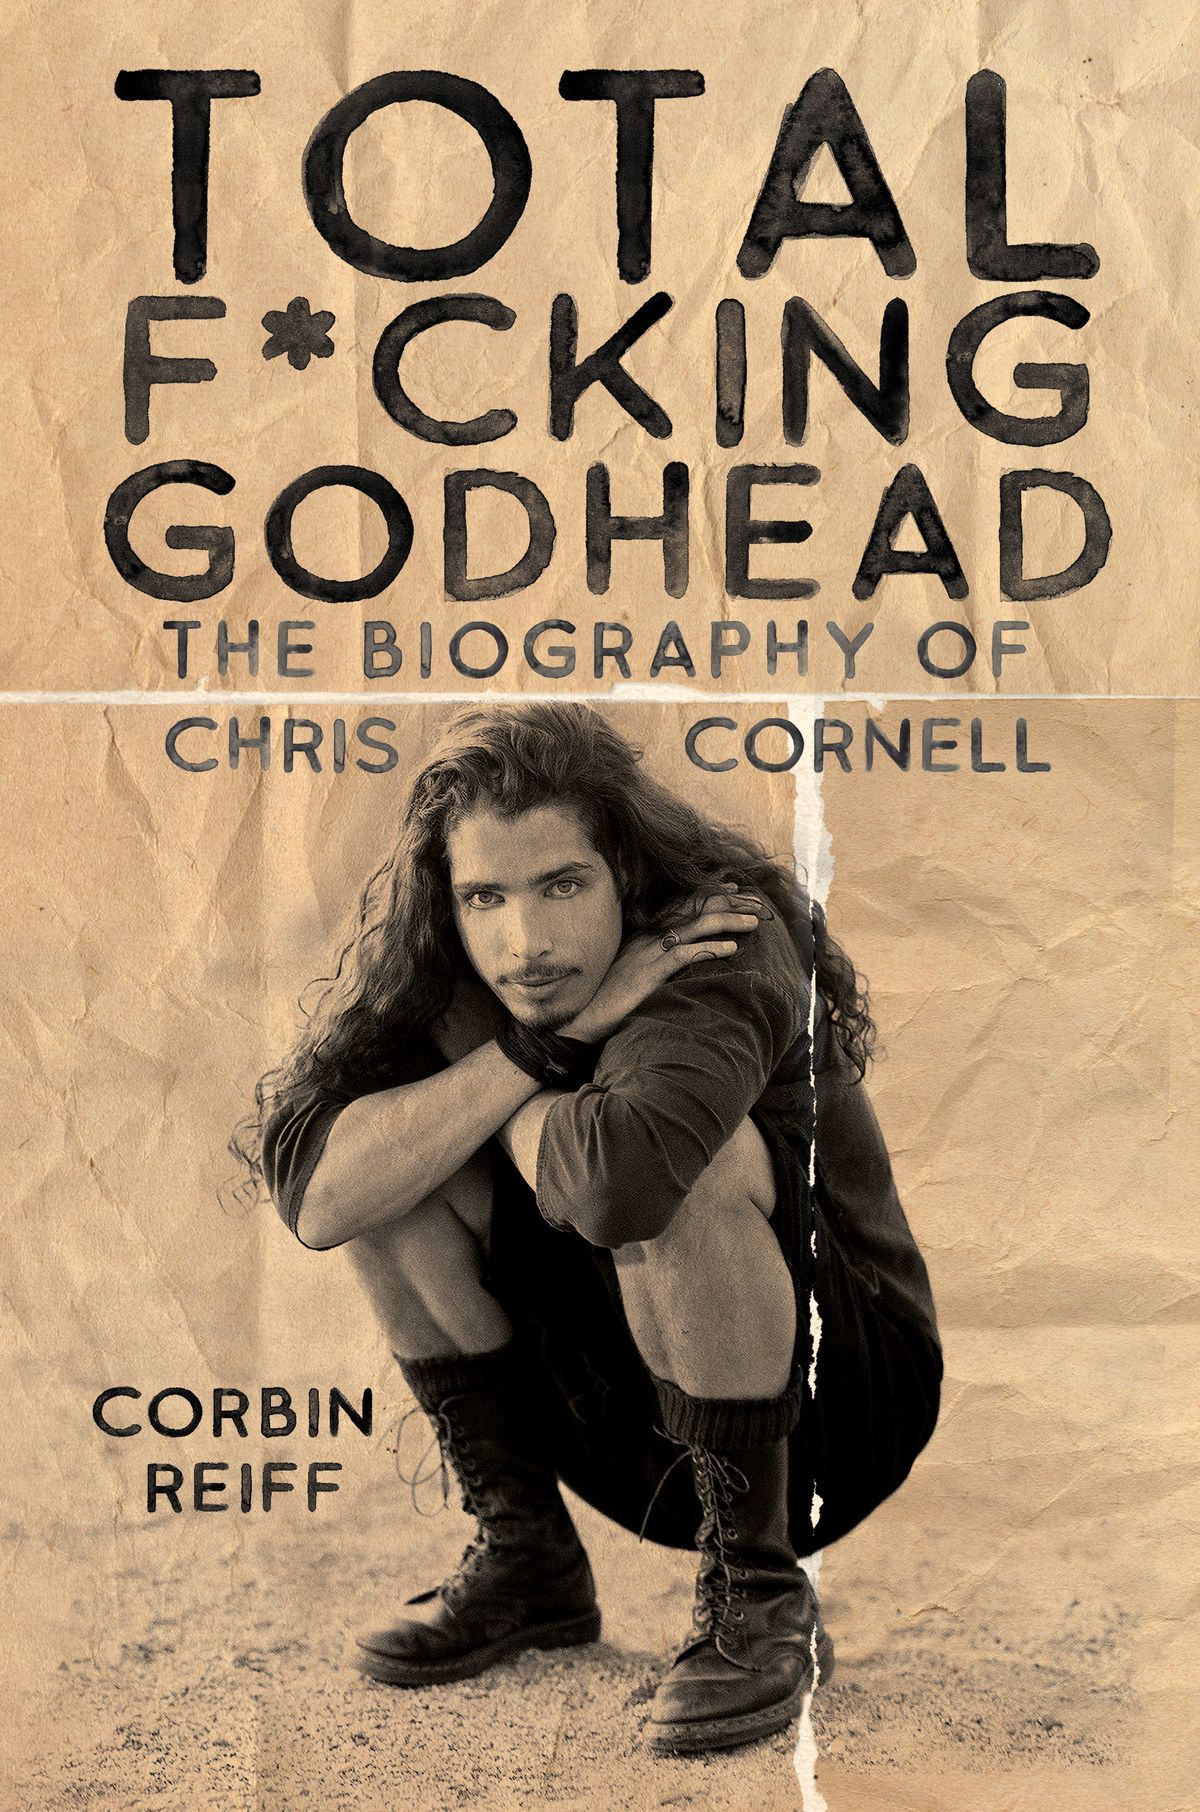 New books focus on Pearl Jam, Chris Cornell, Jimi Hendrix and Mark